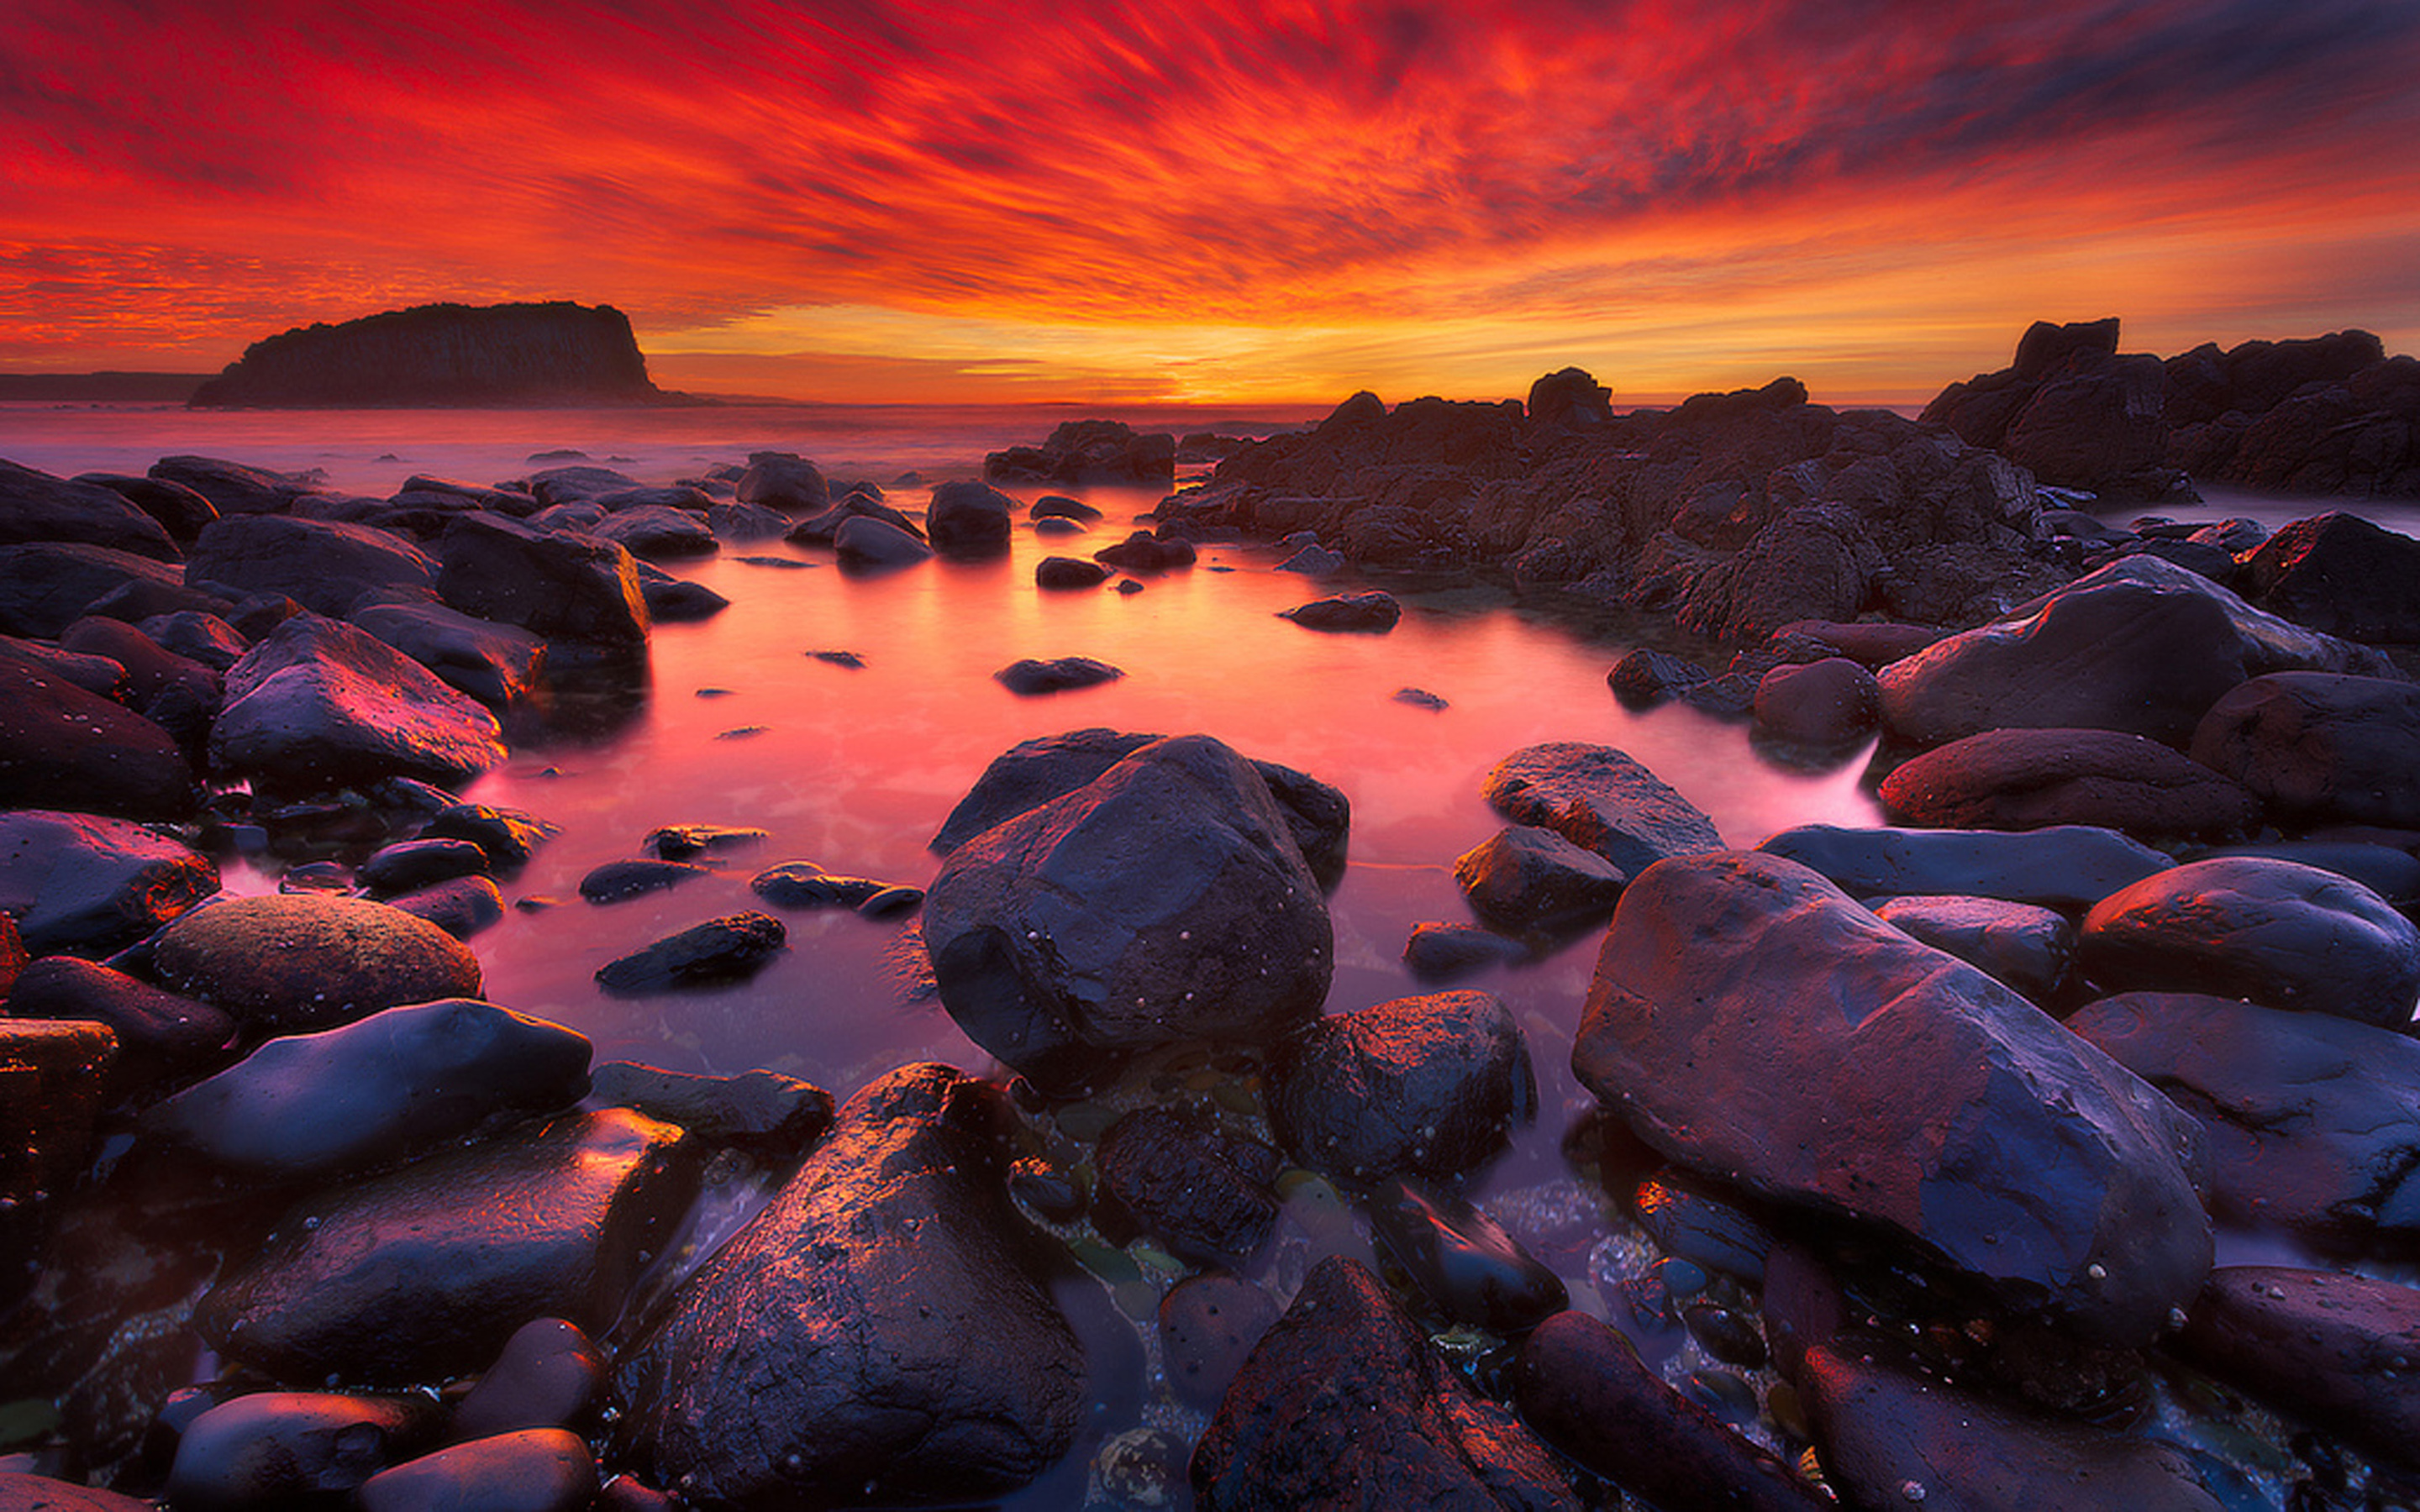 Sunrise in Minnamurra-Australia-sea coast with rocks Ocean-sky with red